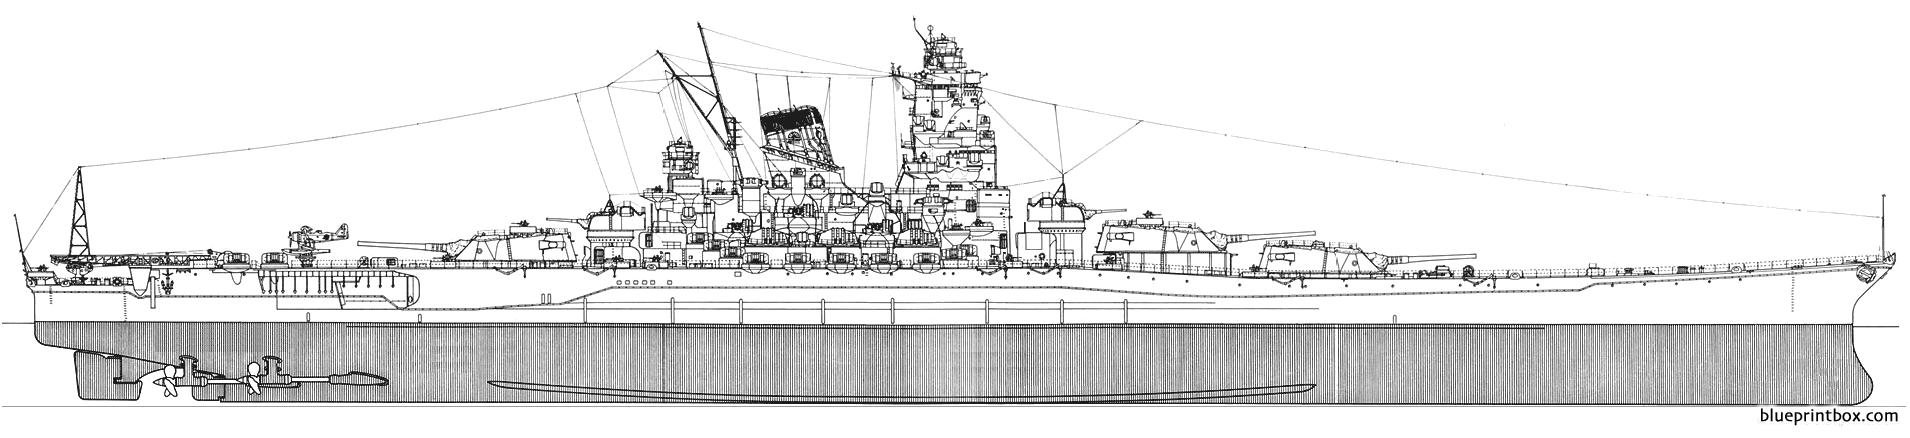 Yamato Battleship Deck Plans